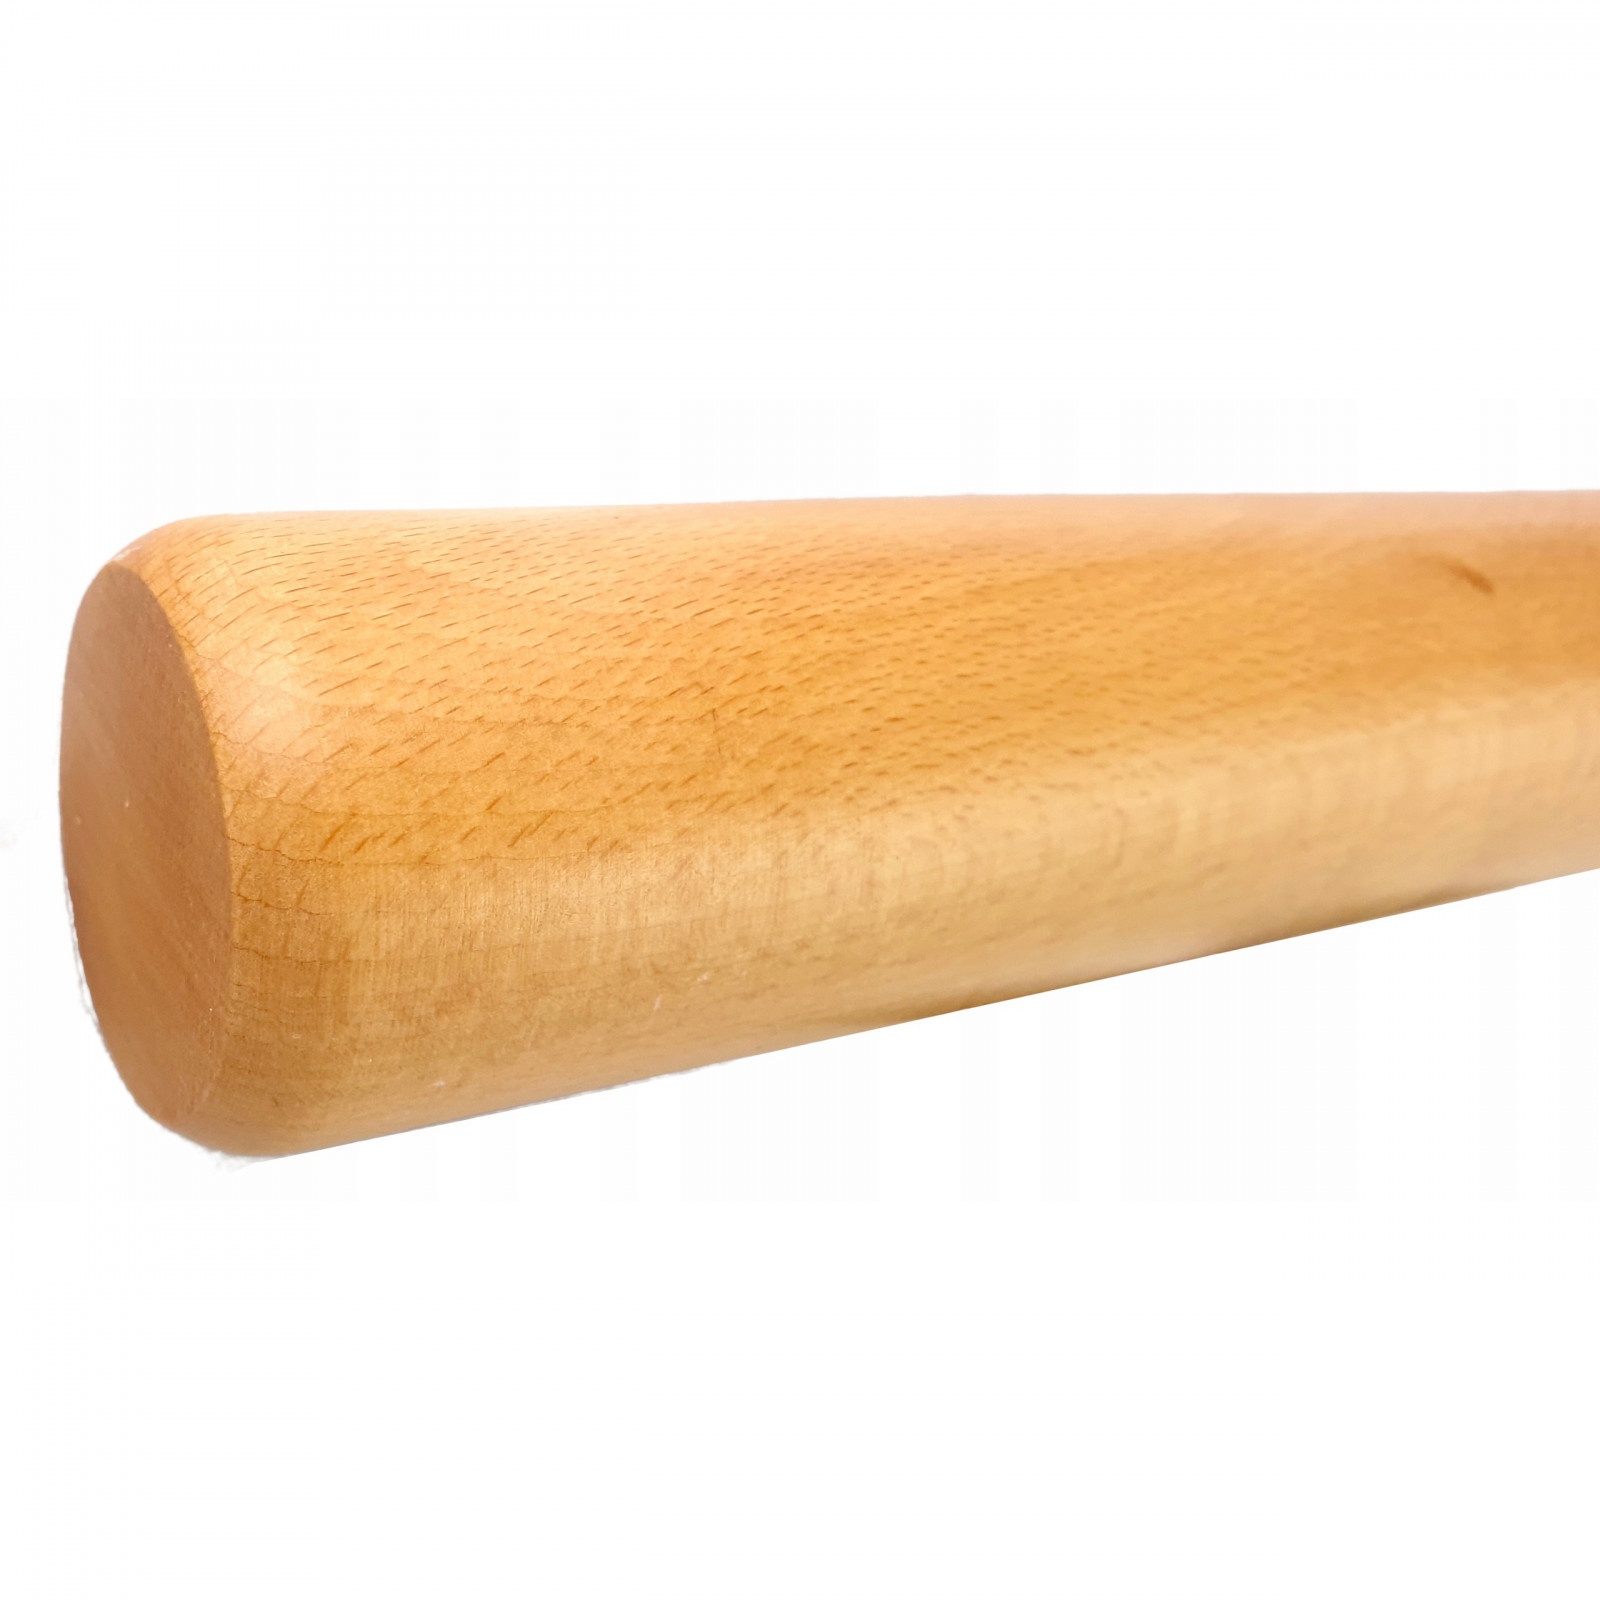 baseballová pálka 64cm 550g drevená bejzbal DKM megamix.sk